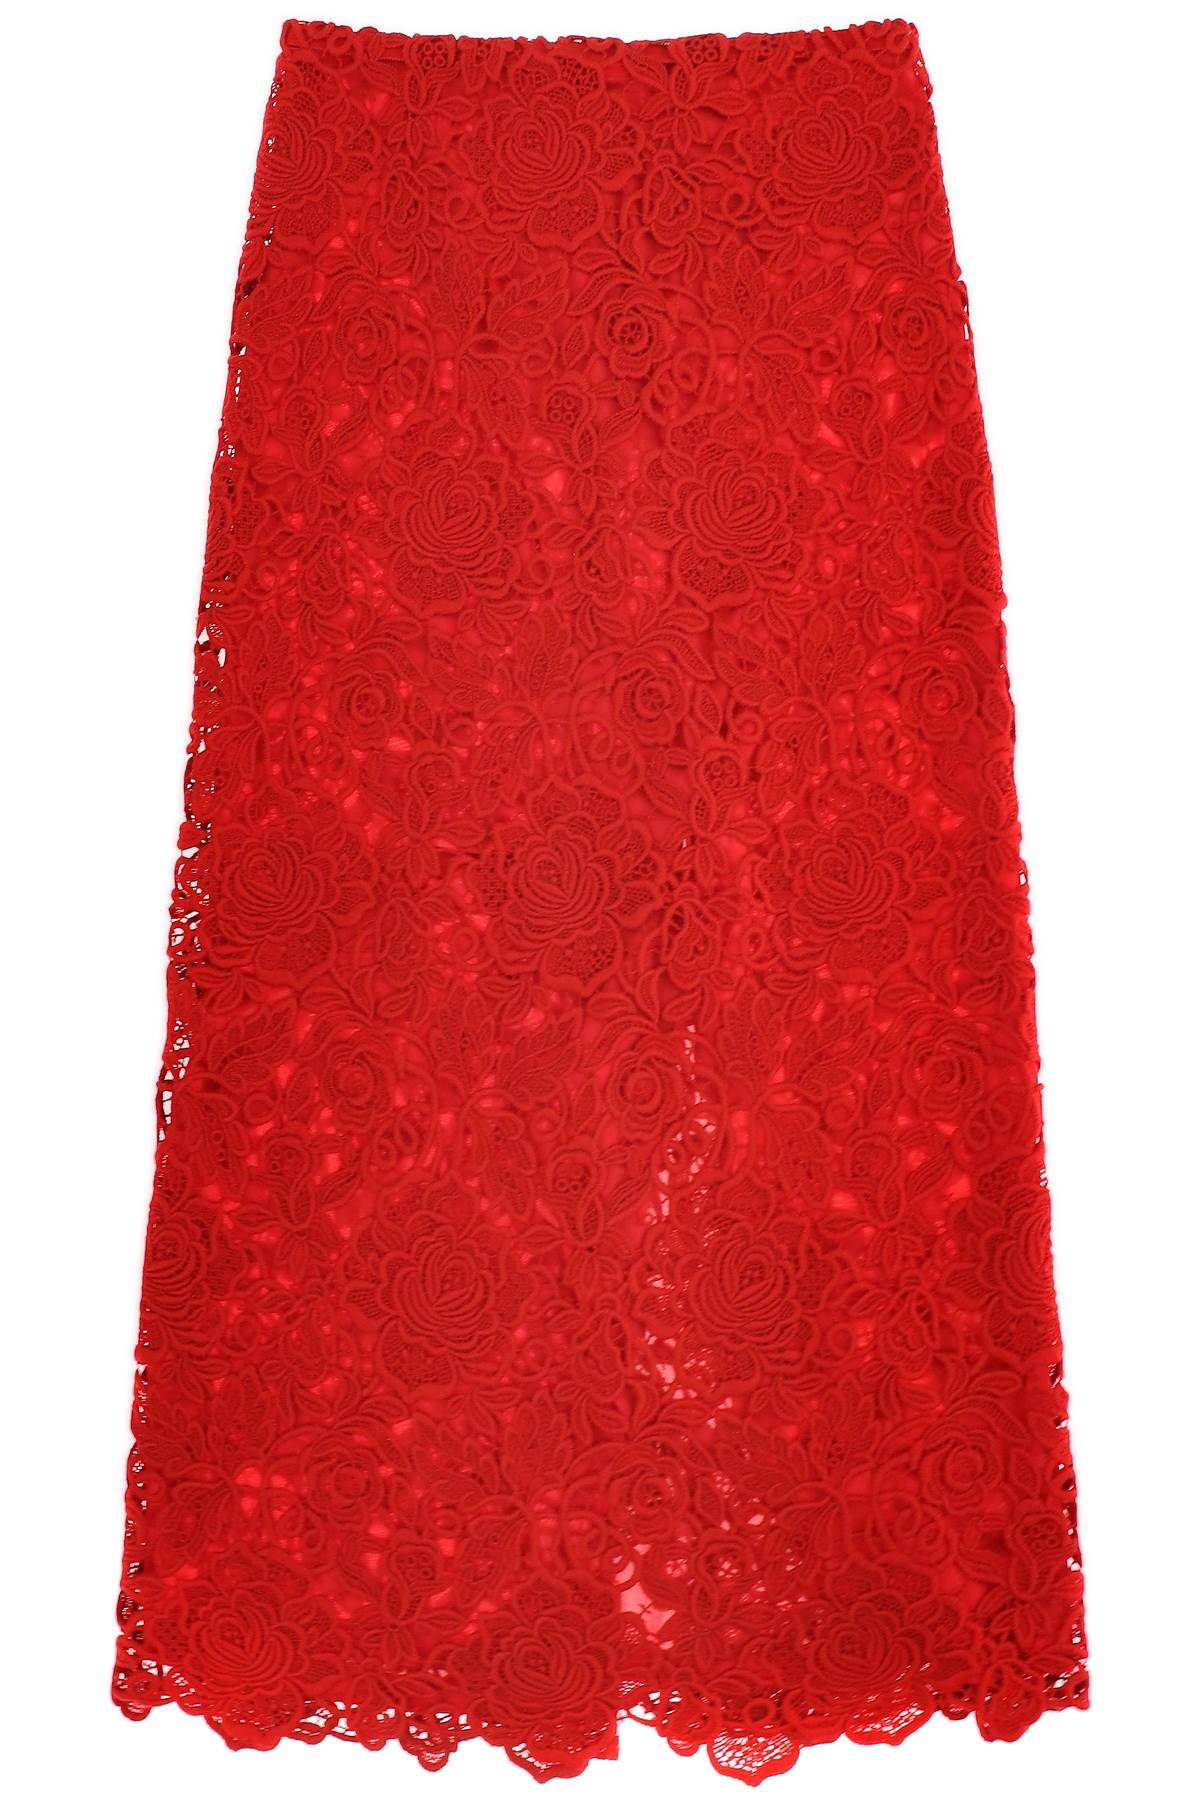 Valentino Garavani Floral Guipure Lace Pencil Skirt   Red